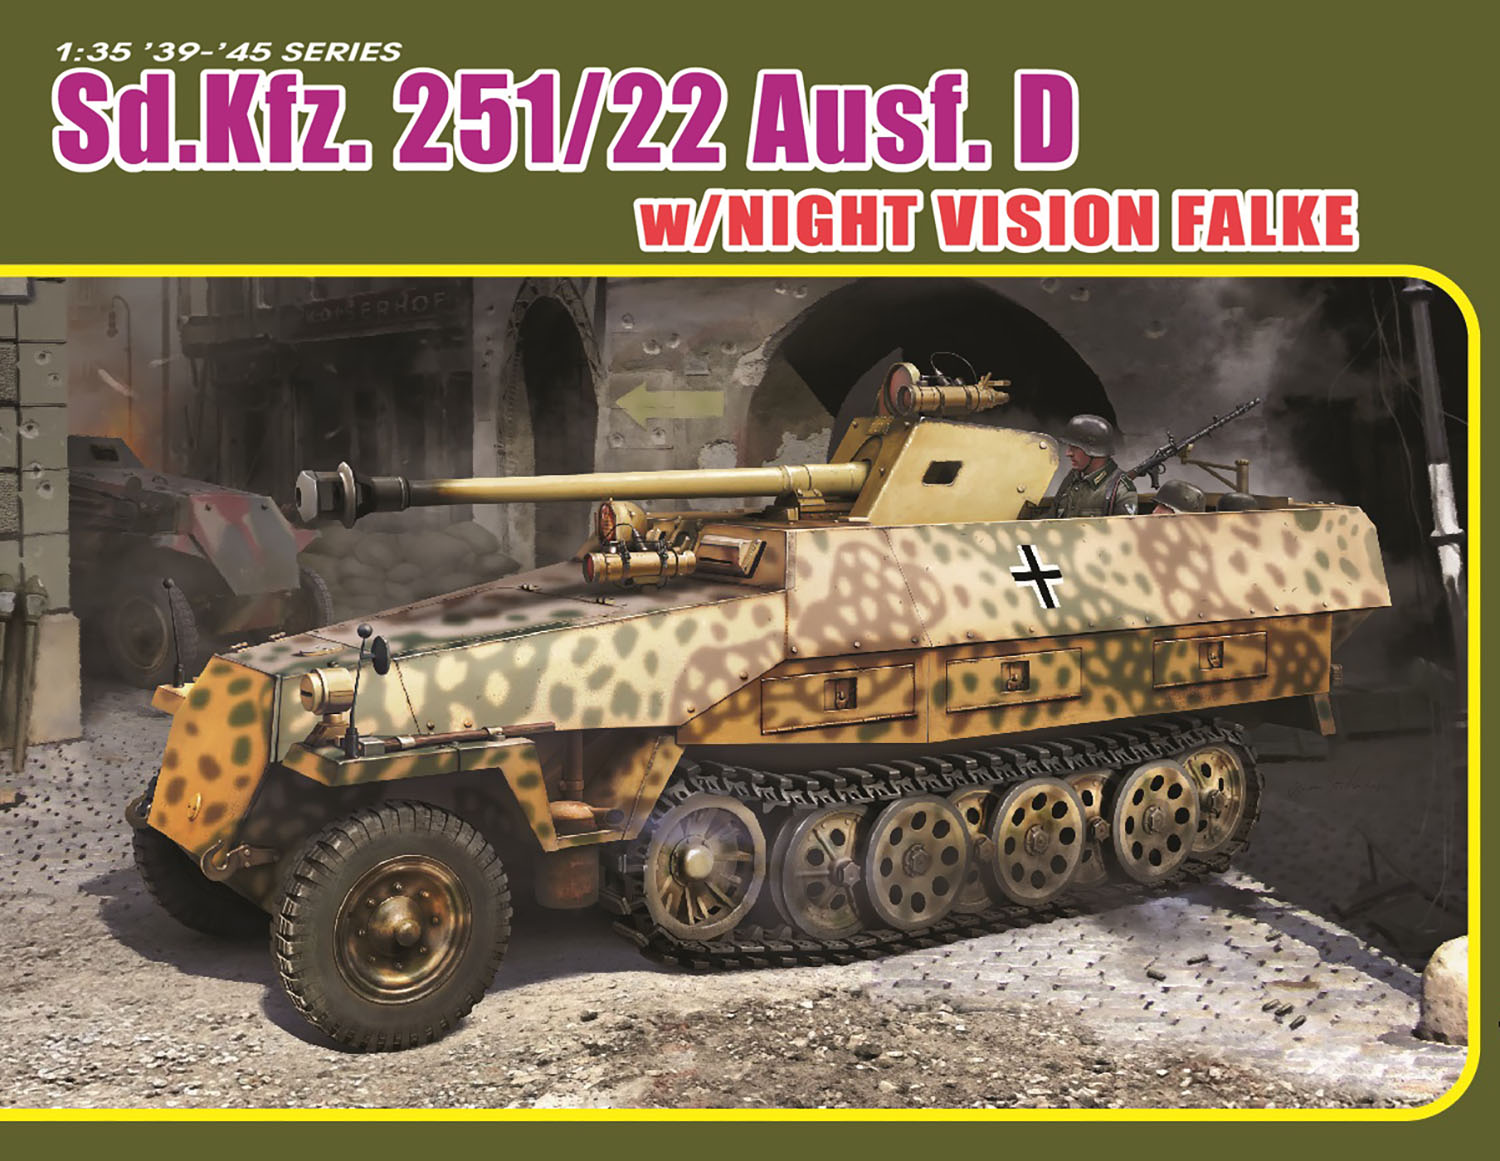 1/35 WW.II ドイツ軍 Sd.Kfz.251/22 Ausf.D 7.5cm Pak40搭載型 ナイトビジョン ファルケ